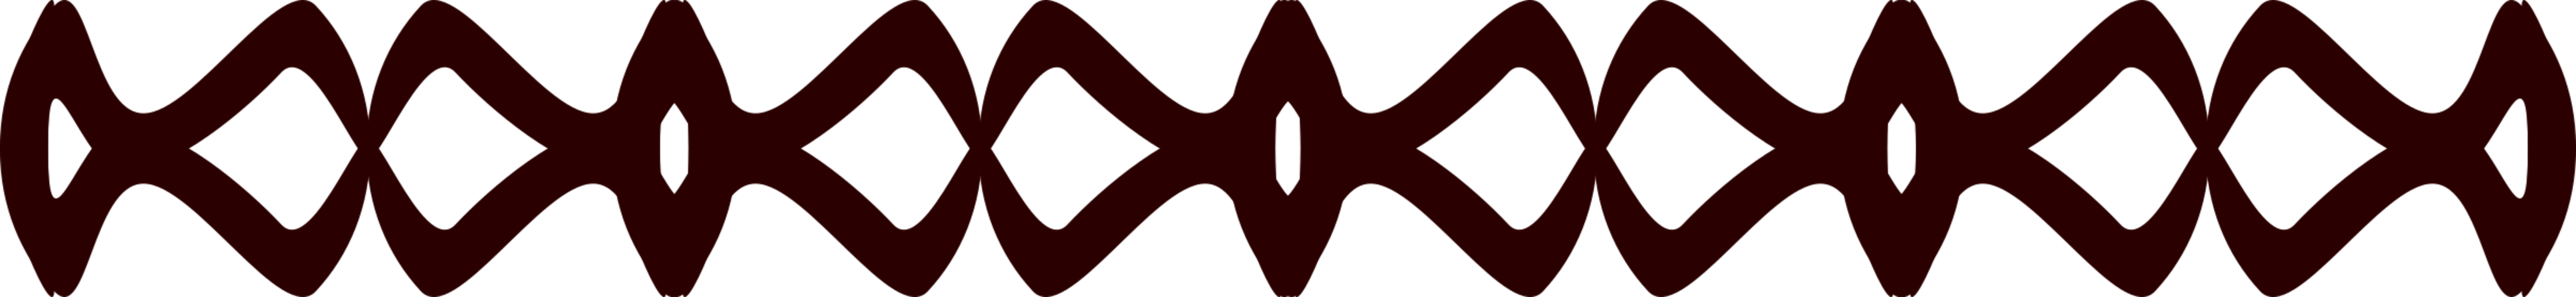 Silhouette,Symmetry,Logo